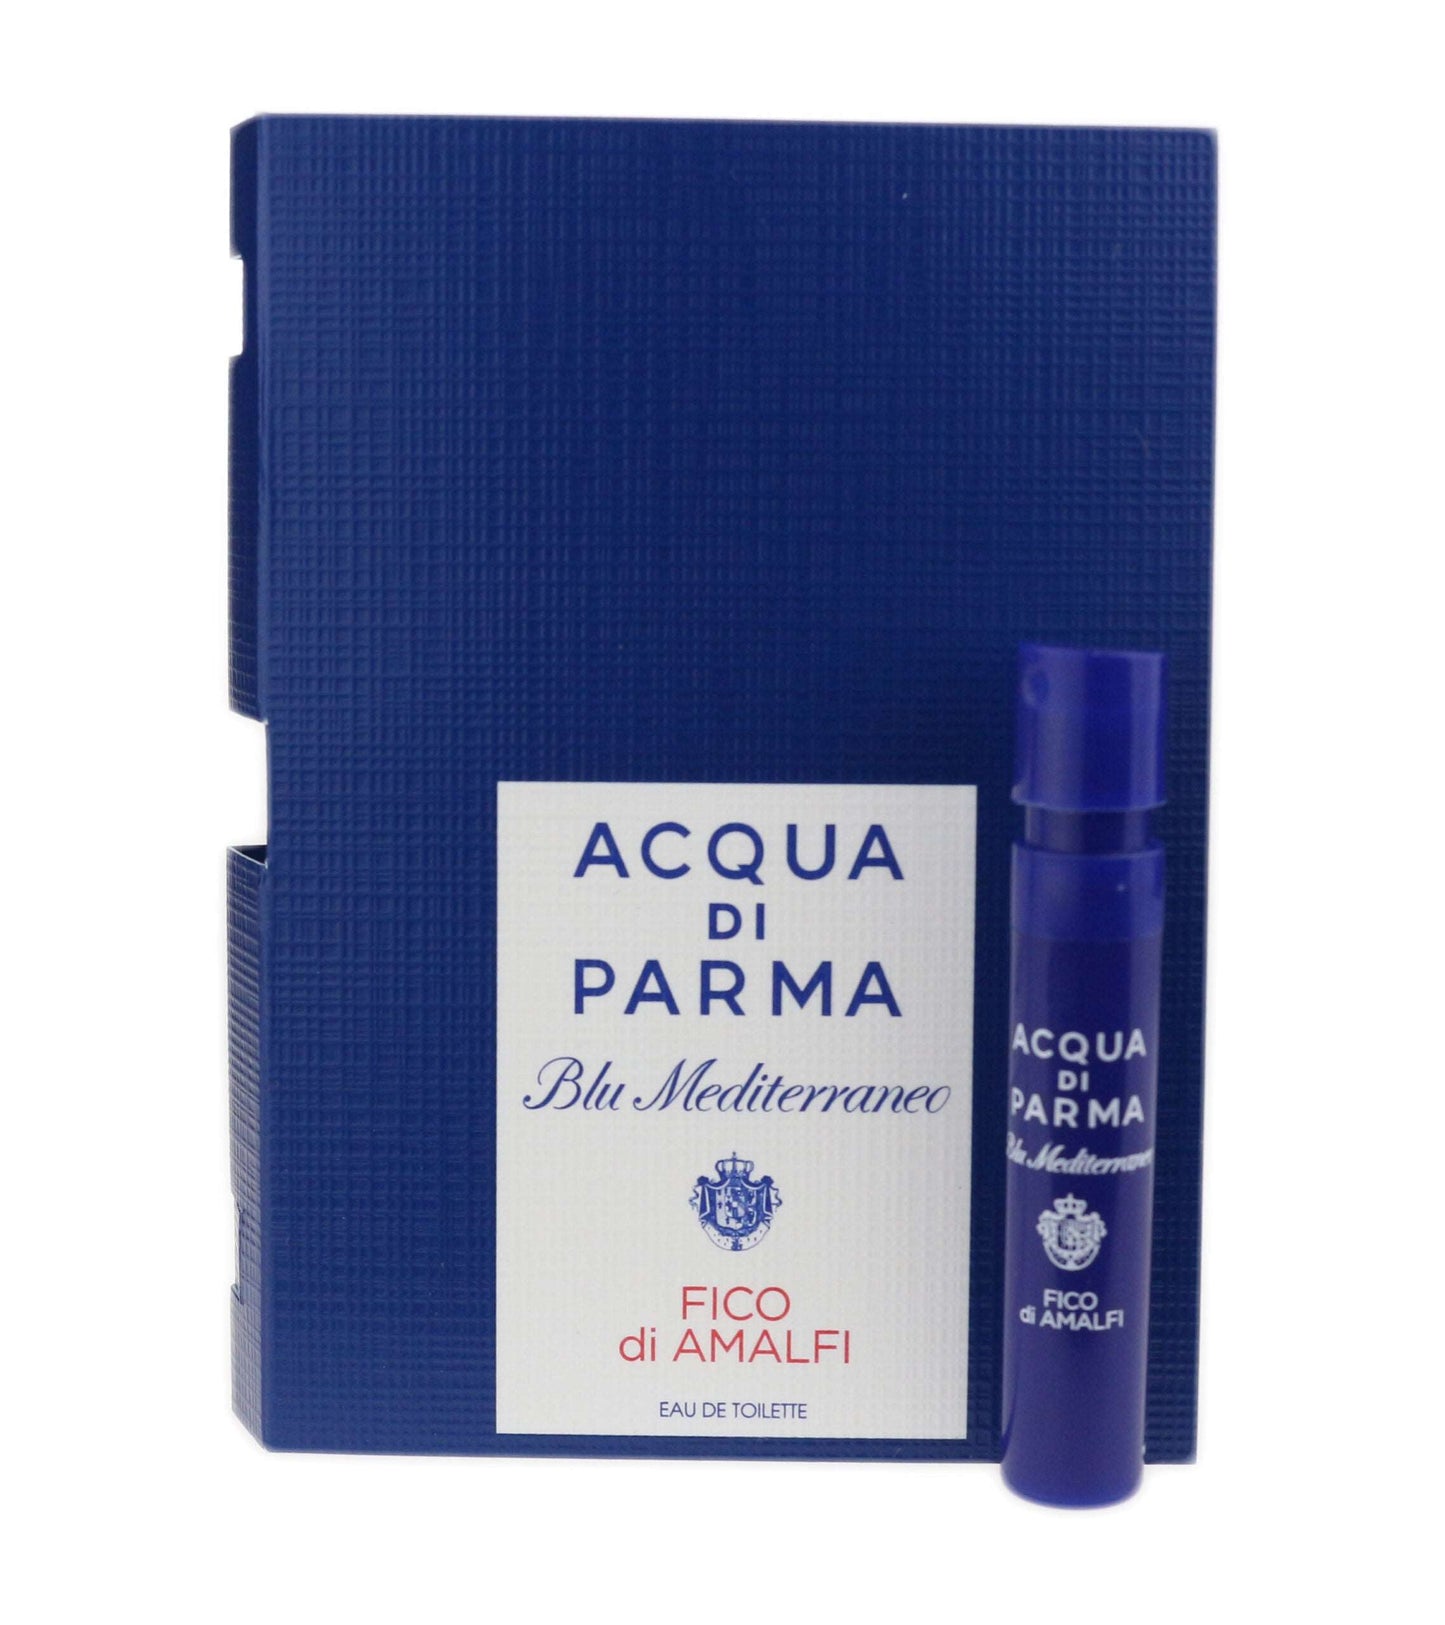 Acqua Di Parma Fico Di Amalfi 1.2ml-0.04 fl.oz. mostre oficiale de parfum